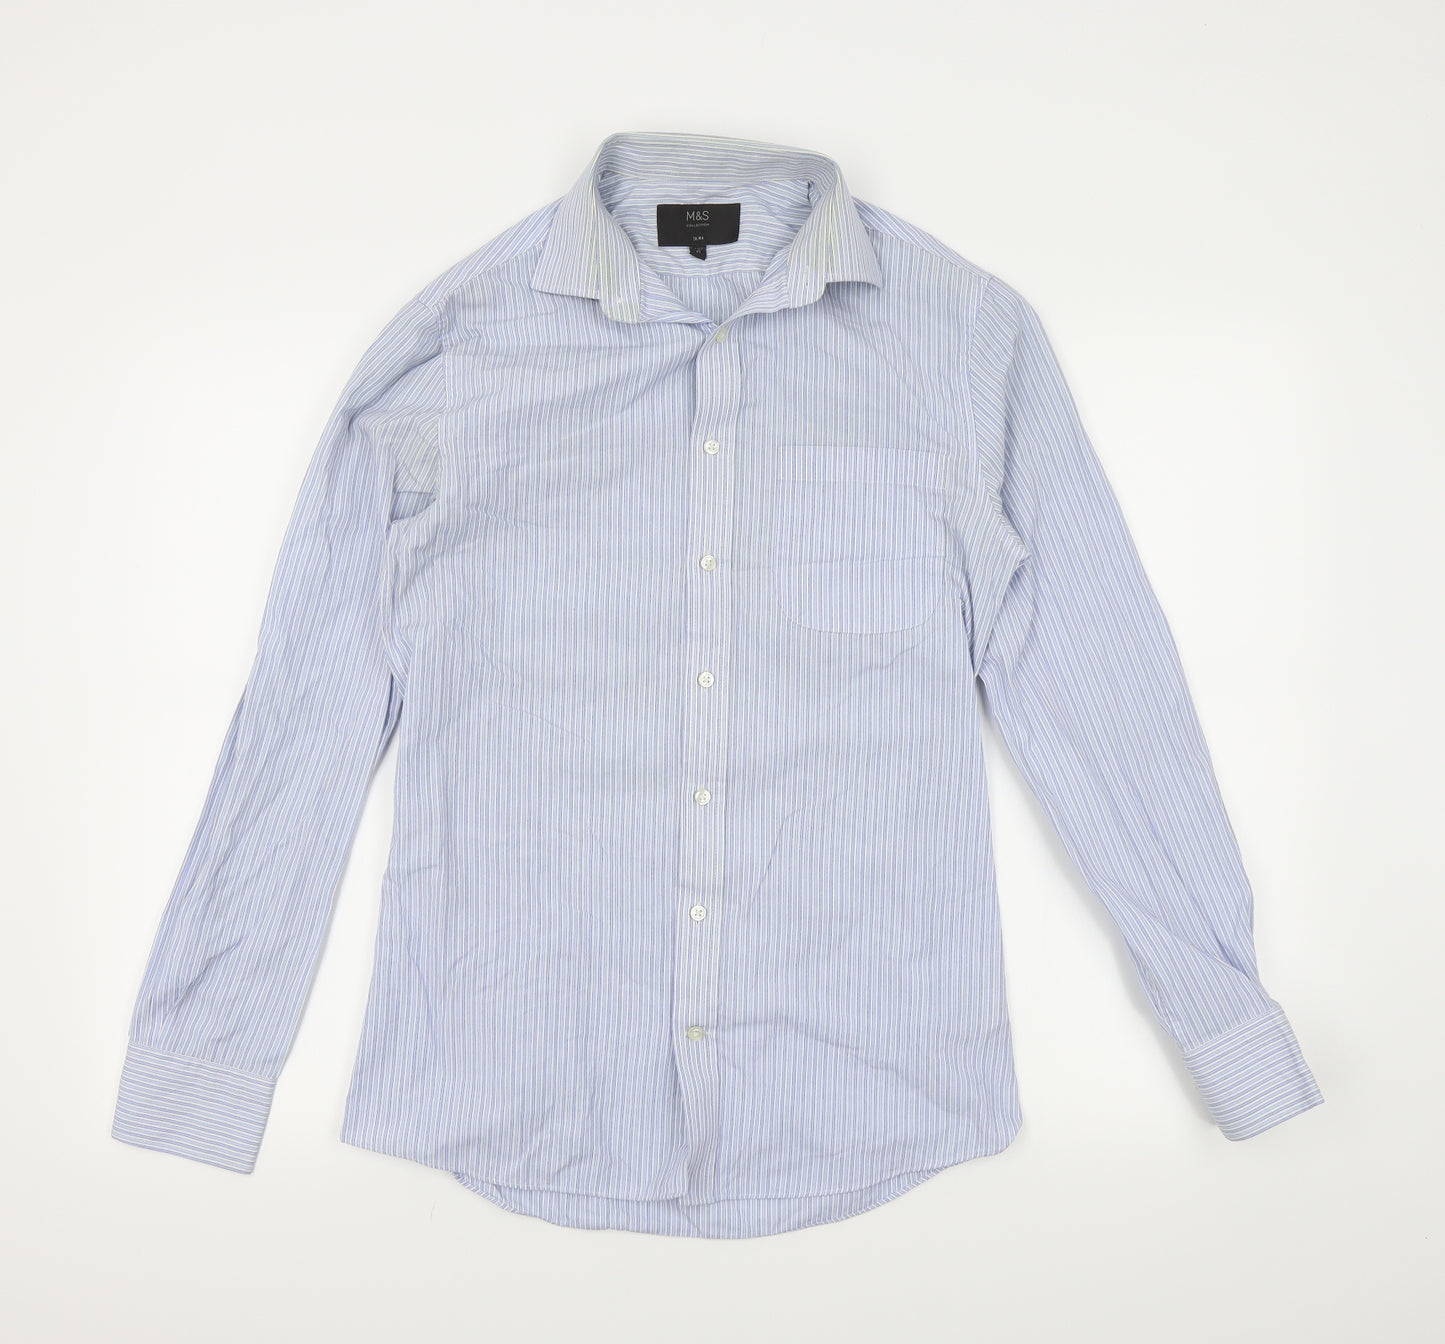 M&S Mens Blue Striped   Dress Shirt Size 14.5